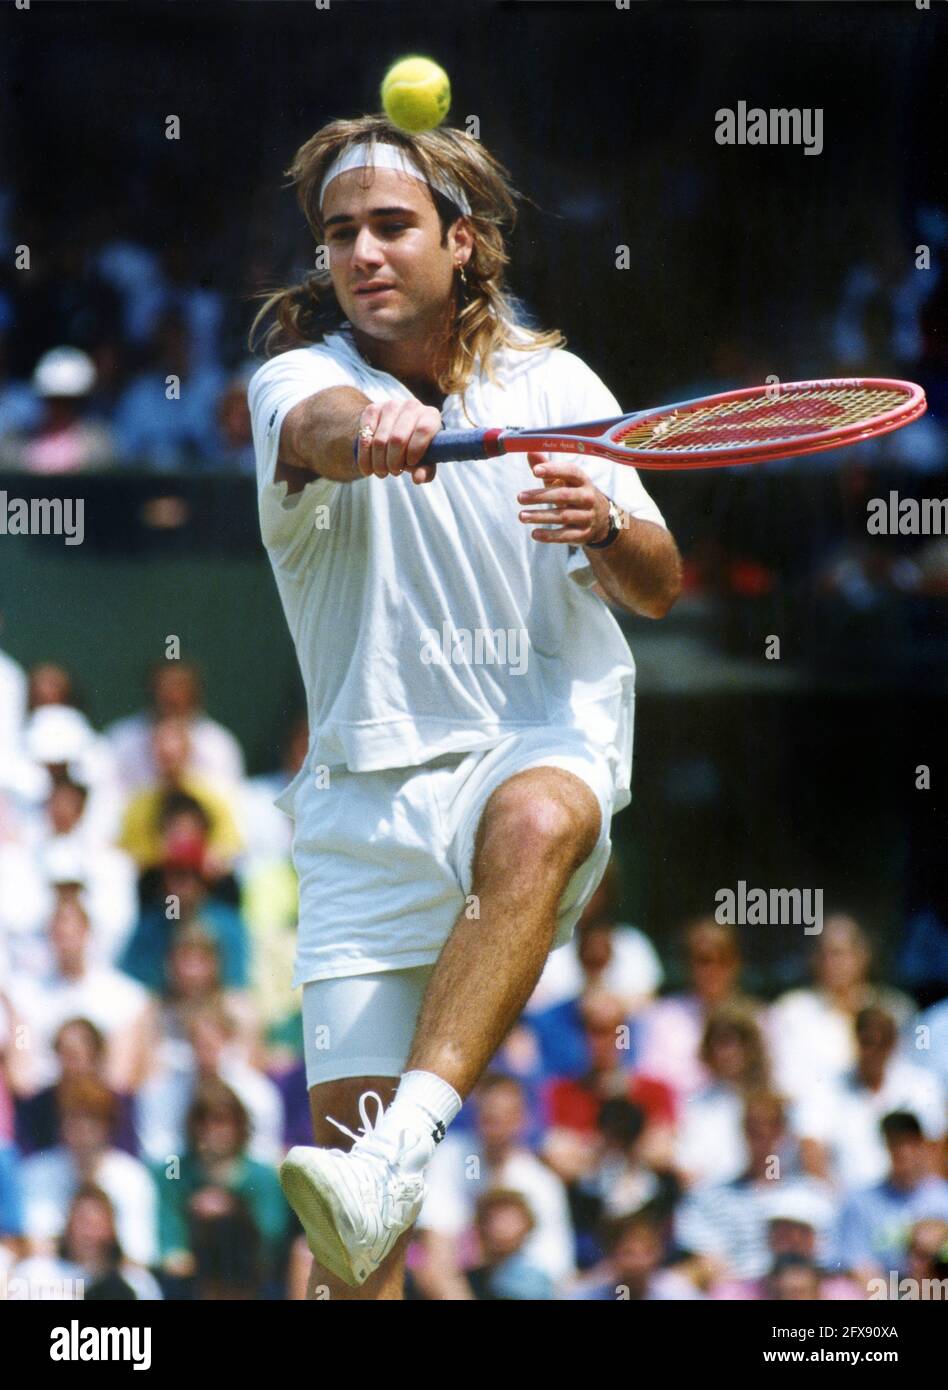 Wimbledon Tennis Tournament 1991 Andre Agassi playing on centre court. Andre Agassi Wimbledon 1990s 1991 tennis action mens Stock Photo